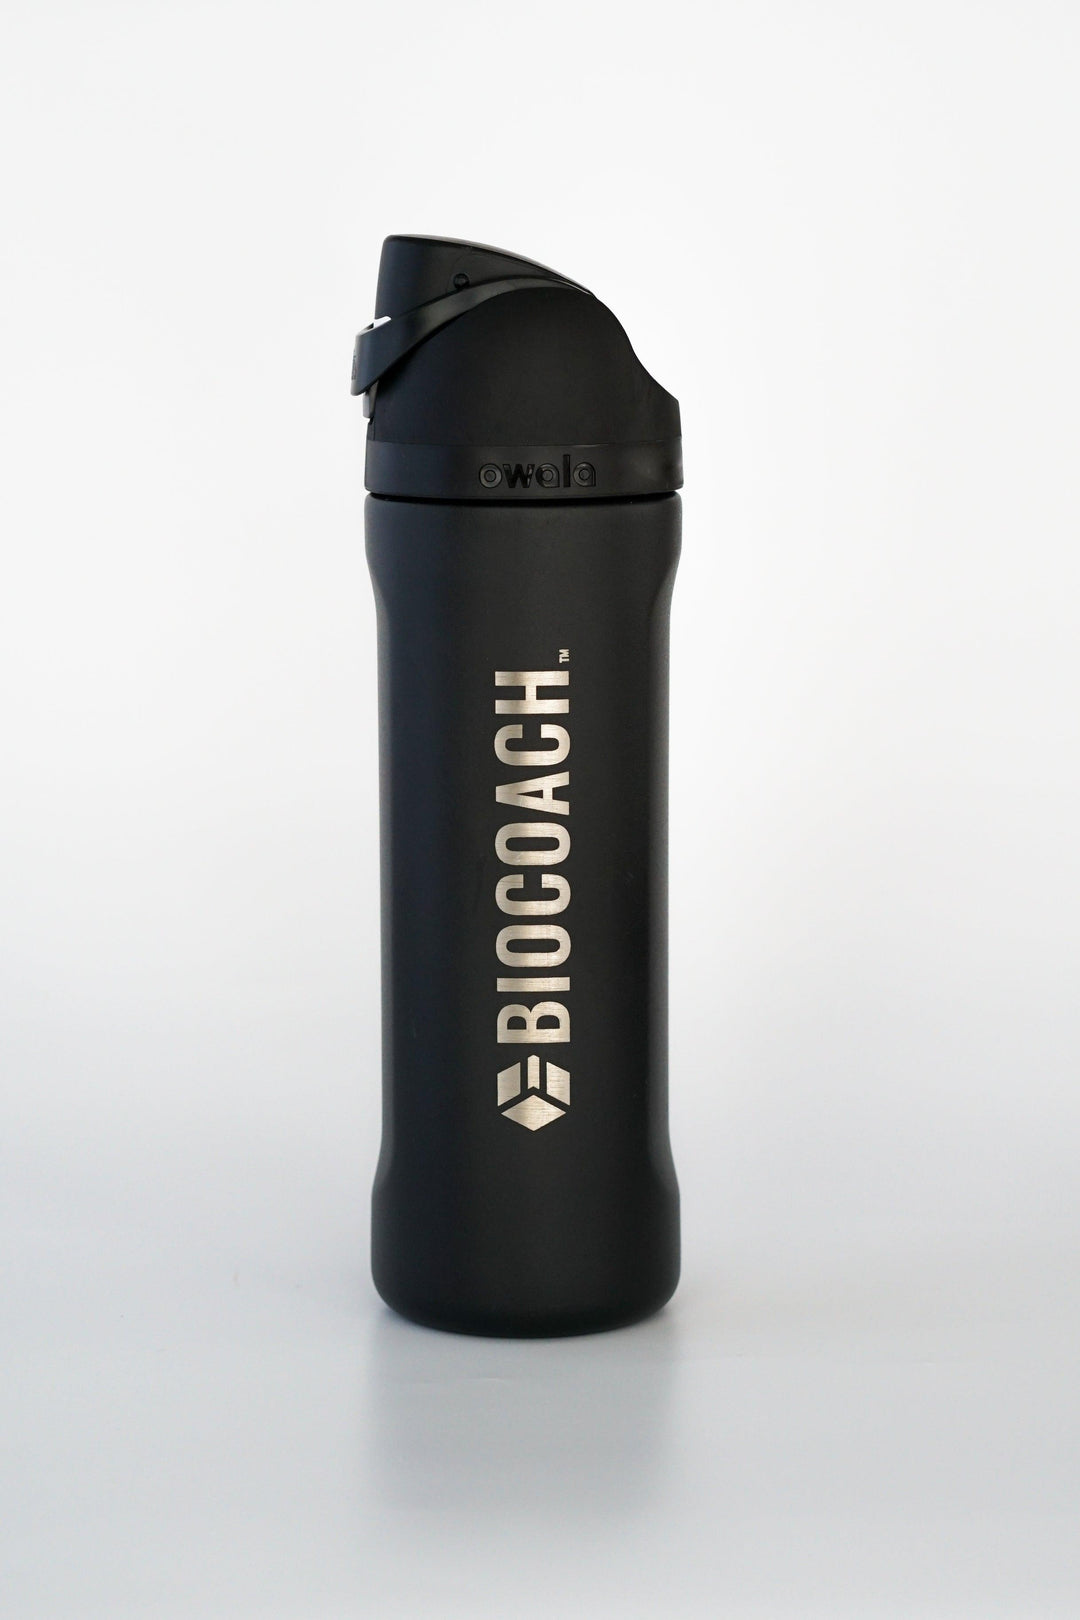 Biocoach x Owala Water Bottle - BioCoach